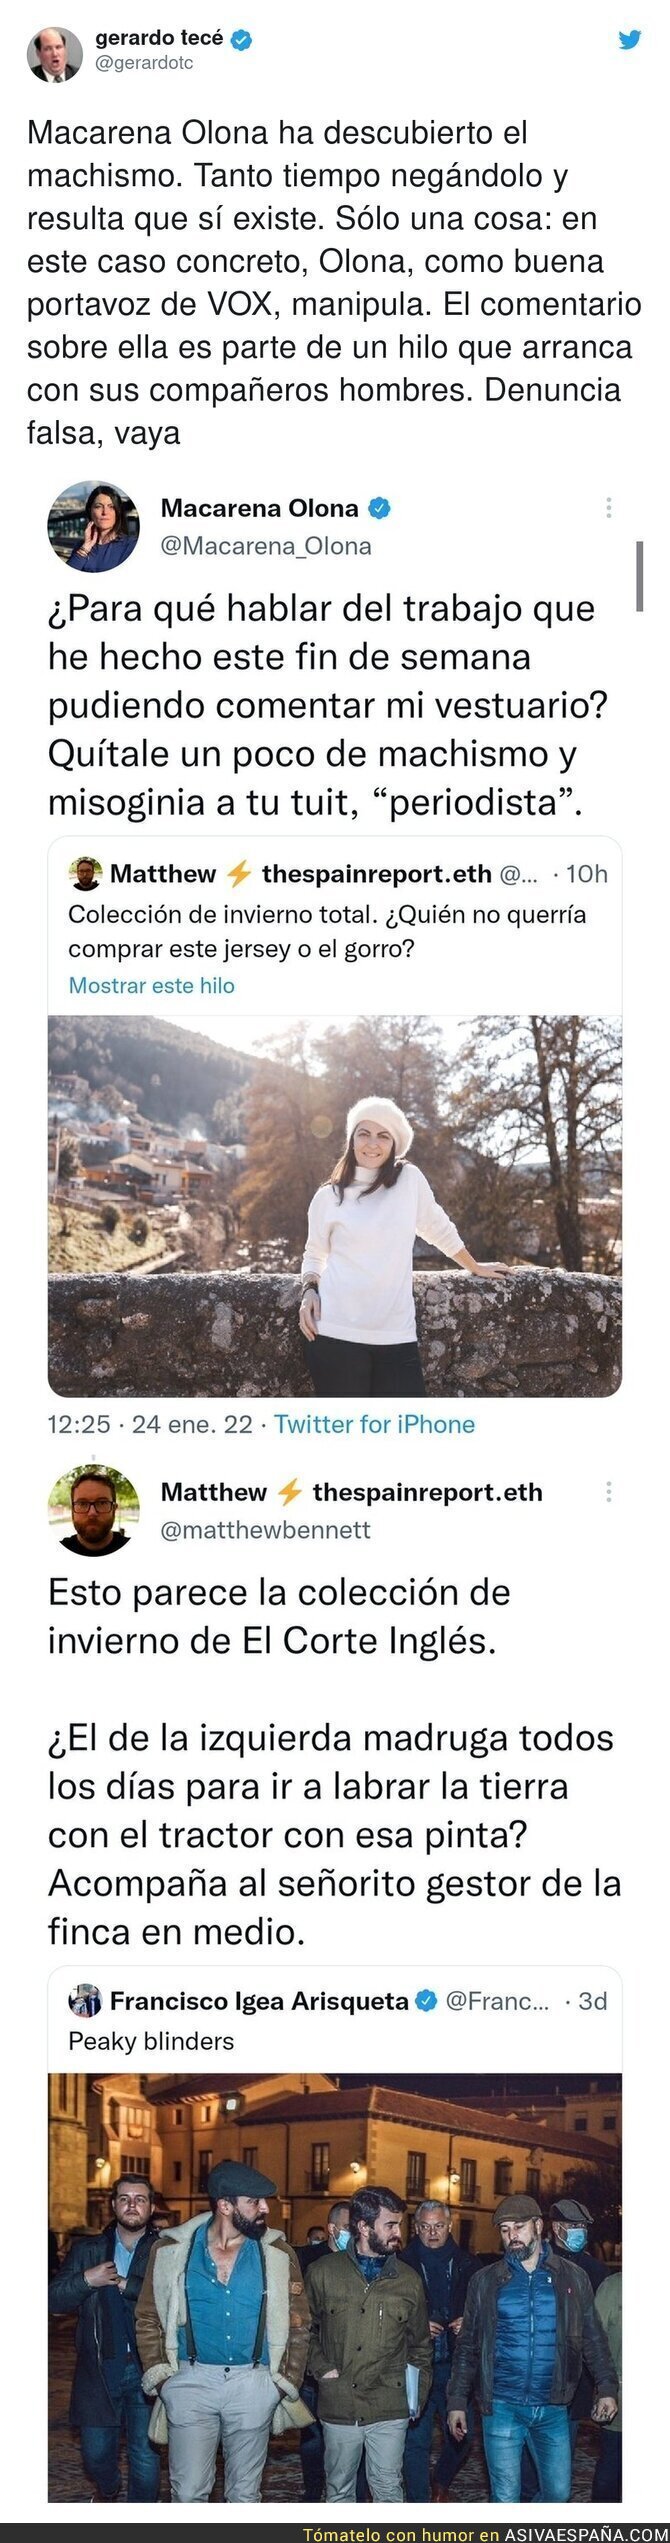 La denuncia falsa de Macarena Olona a este tuitero por hablar de su vestimenta